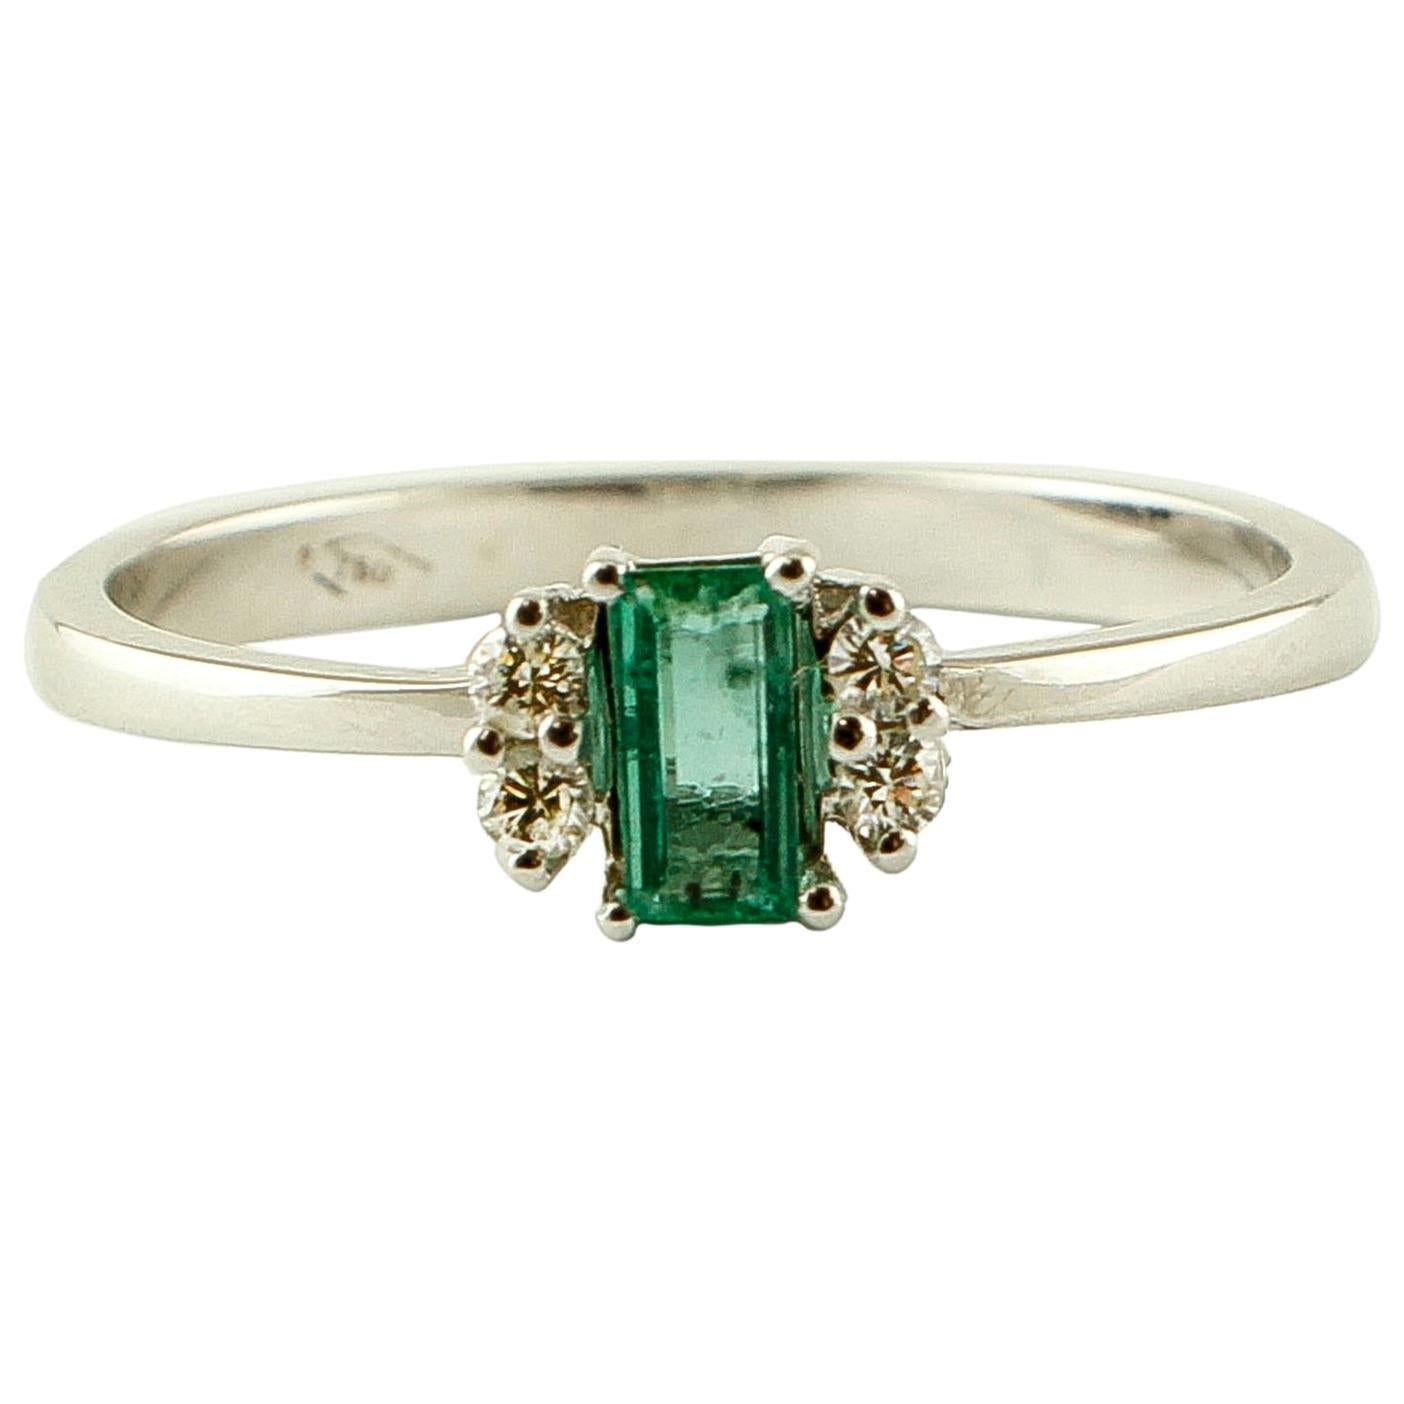 Emerald, Diamonds, 18 Karat White Gold, Solitary Ring